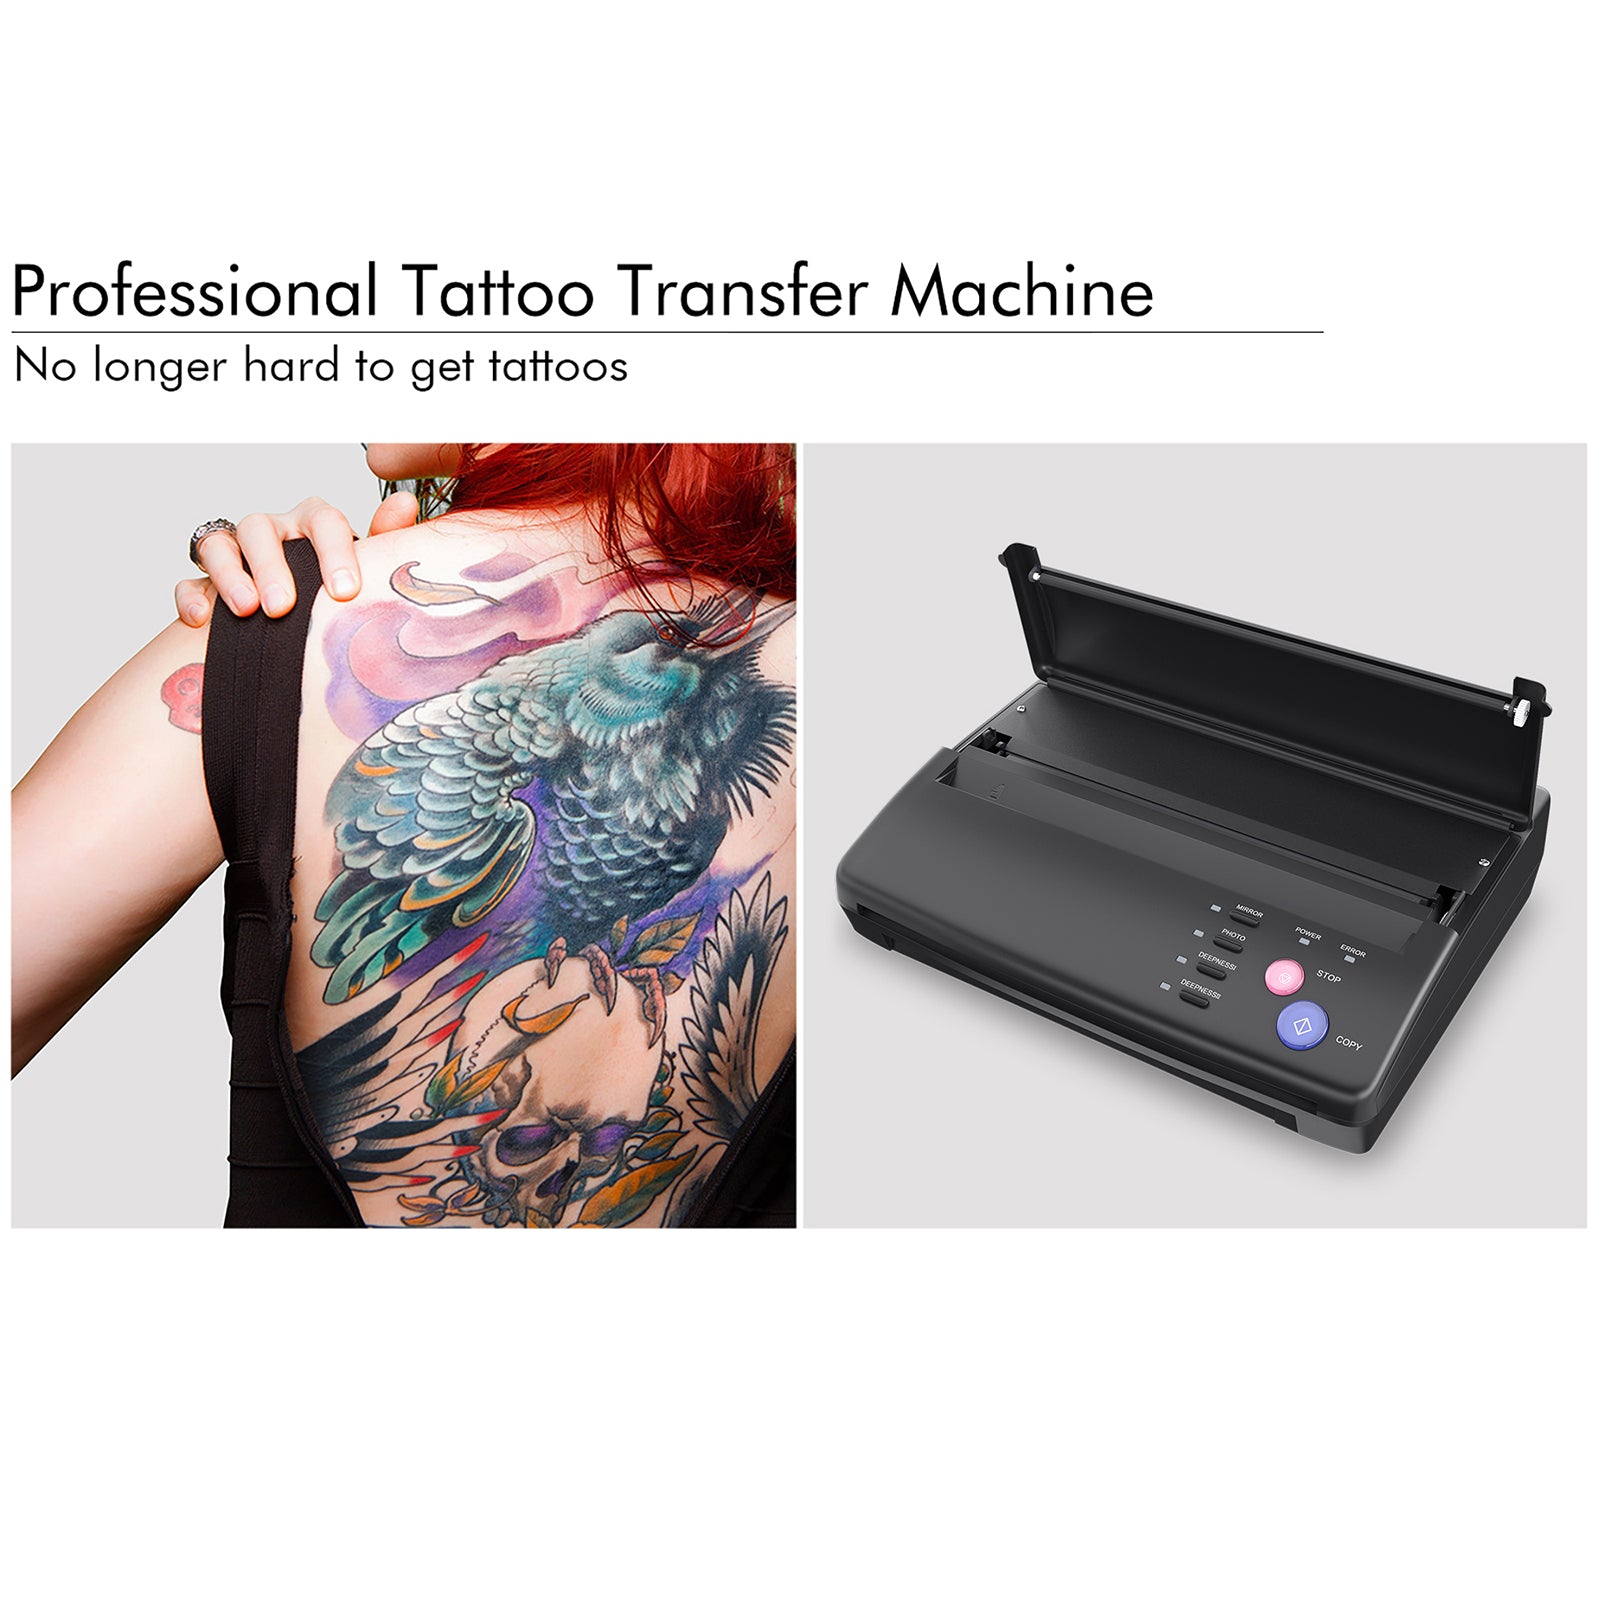 Thunderlord Tattoo Transfer Stencil Machine Copier Printer Thermal Tattoo Kit Copier Printer With 20pcs Free Tattoo Stencil Transfer Paper